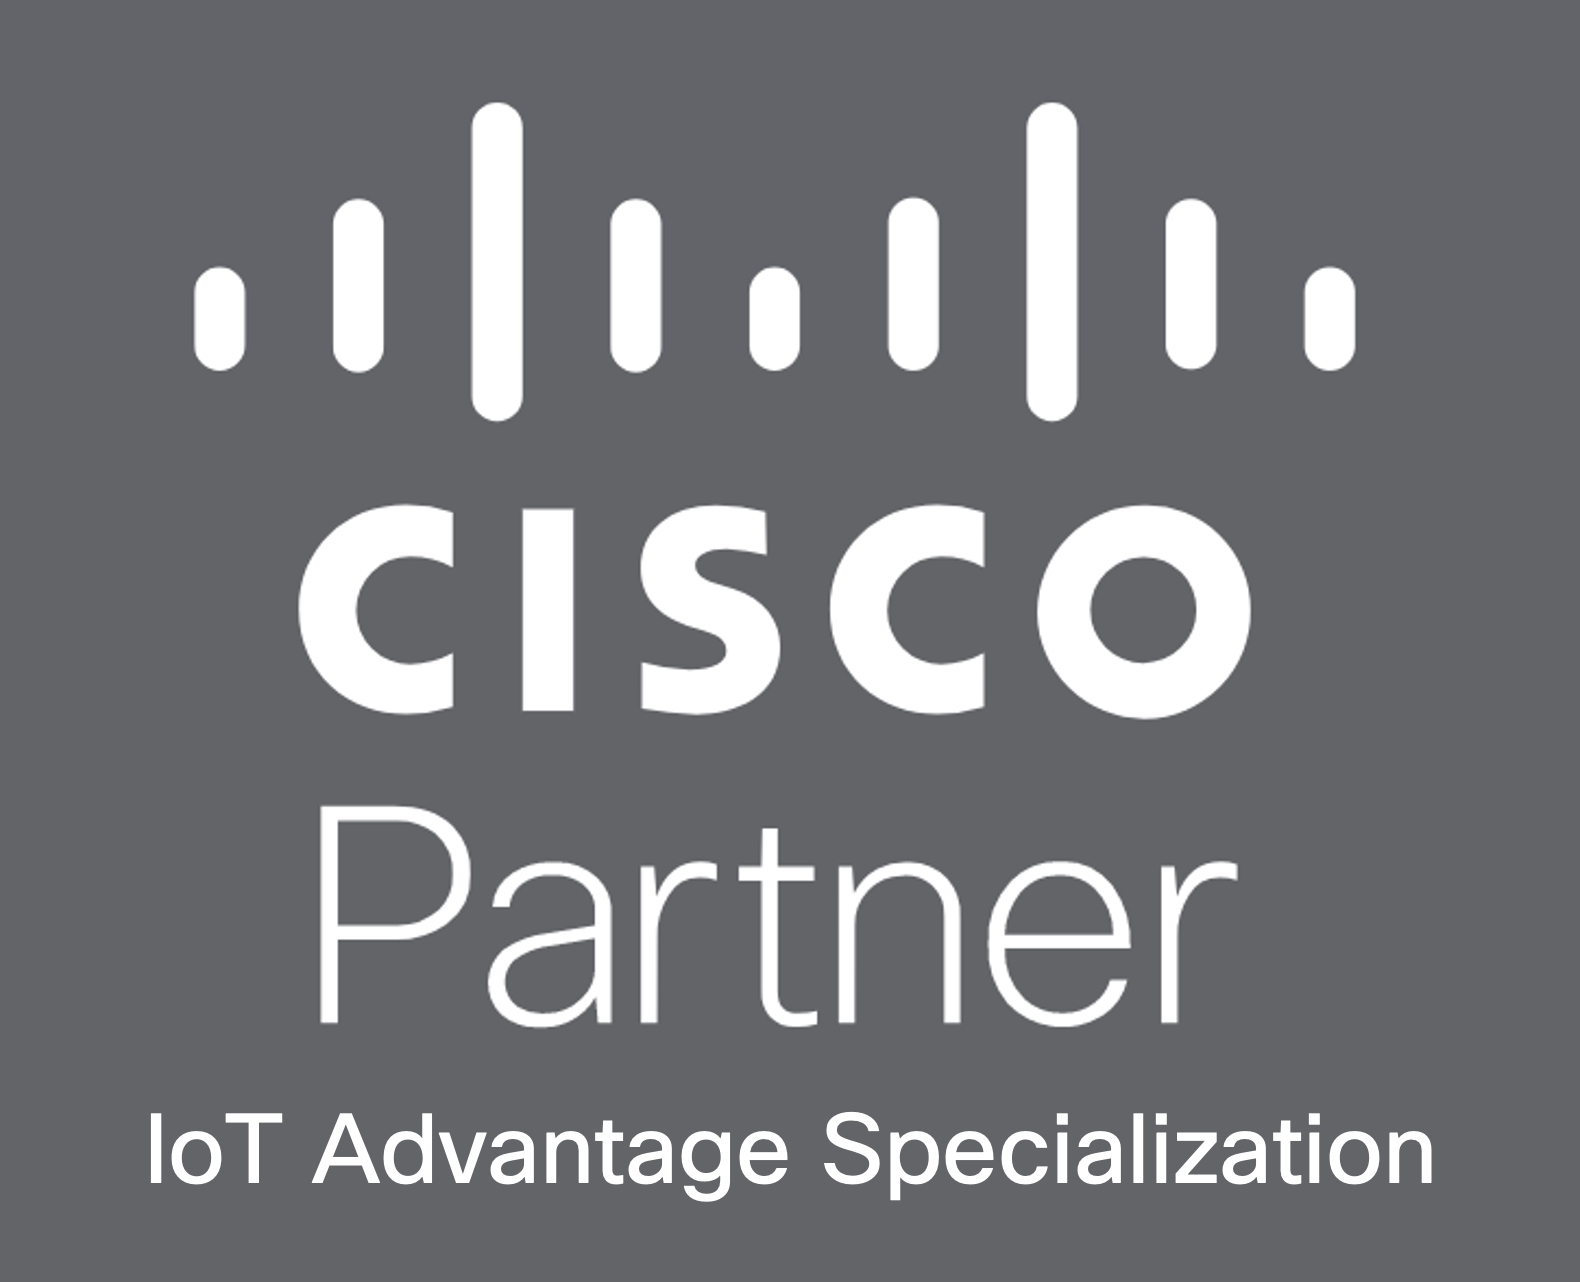 Cisco Partner IoT Advantage Specialization Badge